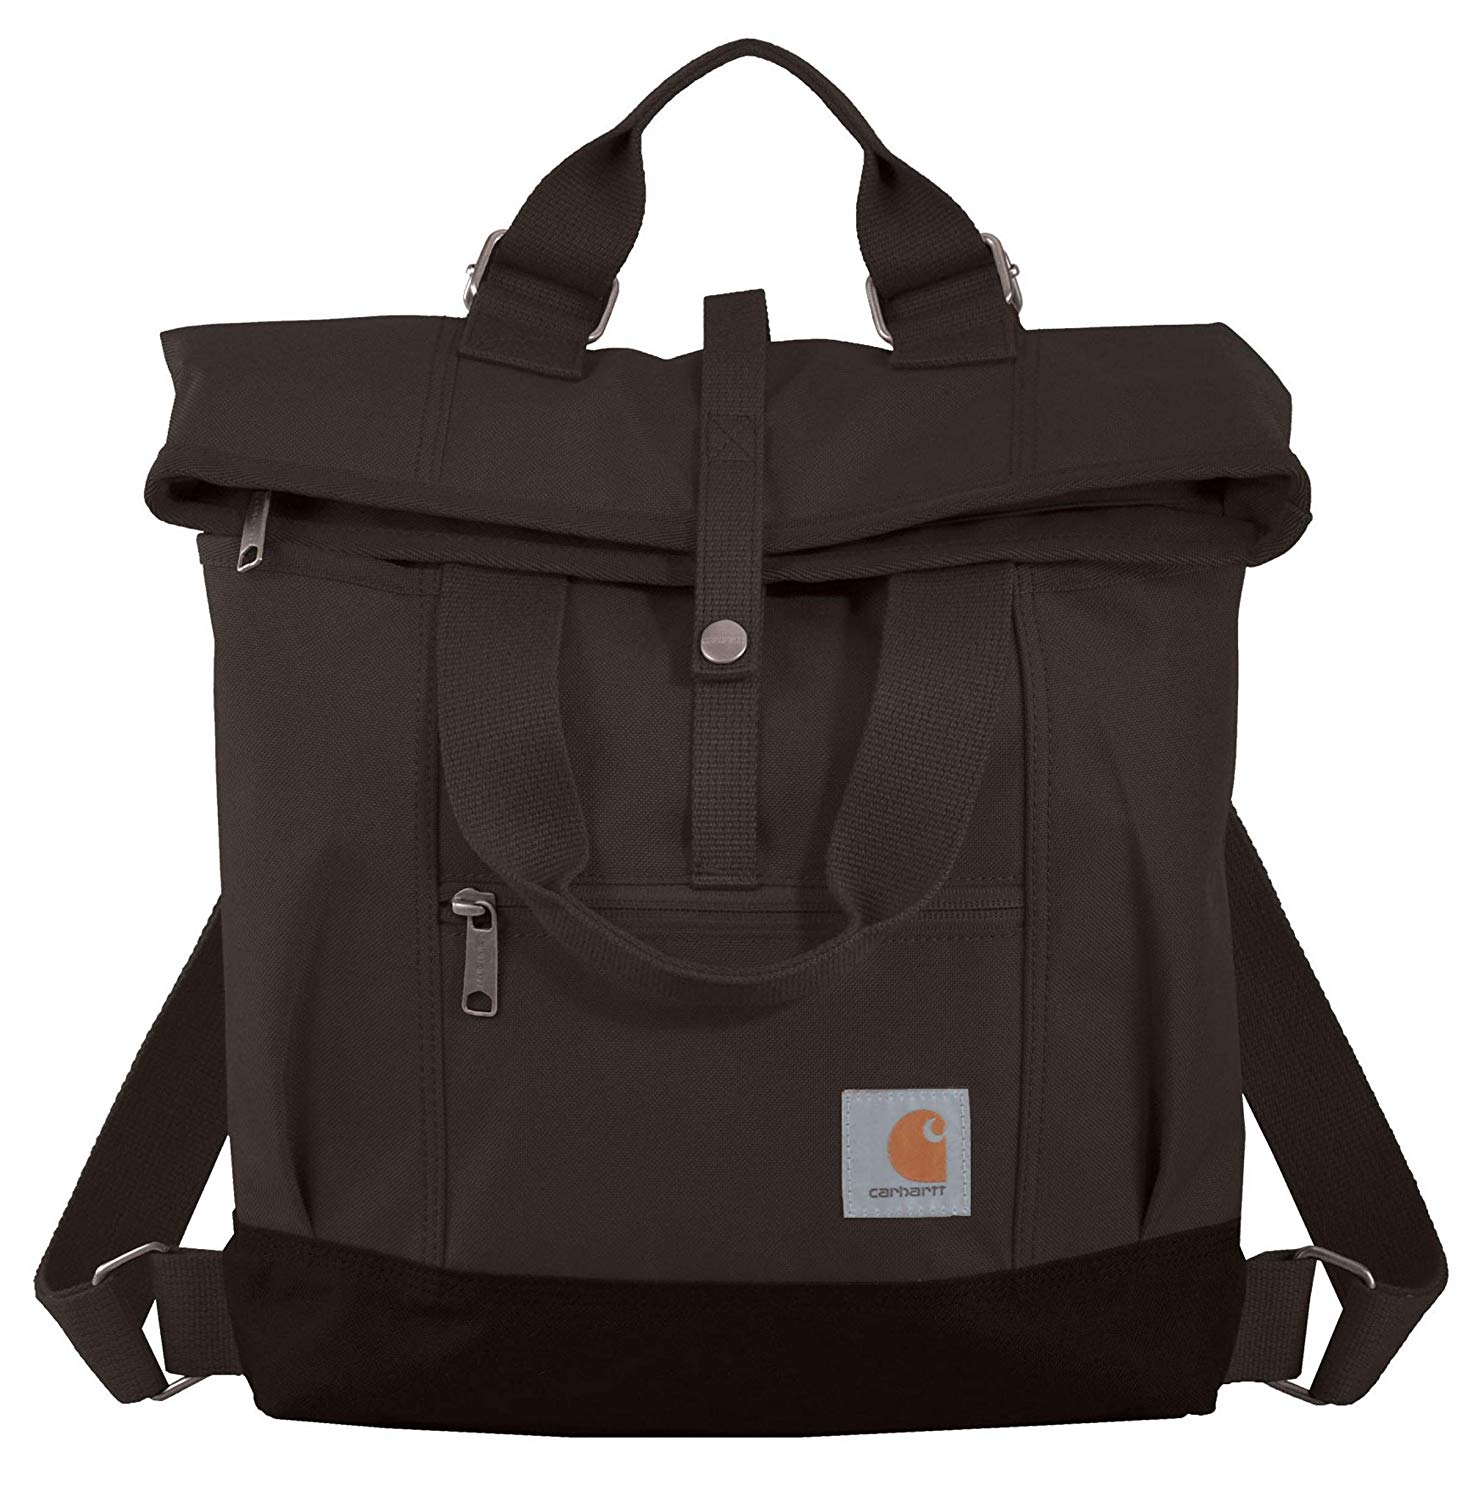 Carhartt-Legacy-Womens-Hybrid-Convertible-Backpack-Tote-Bag-2